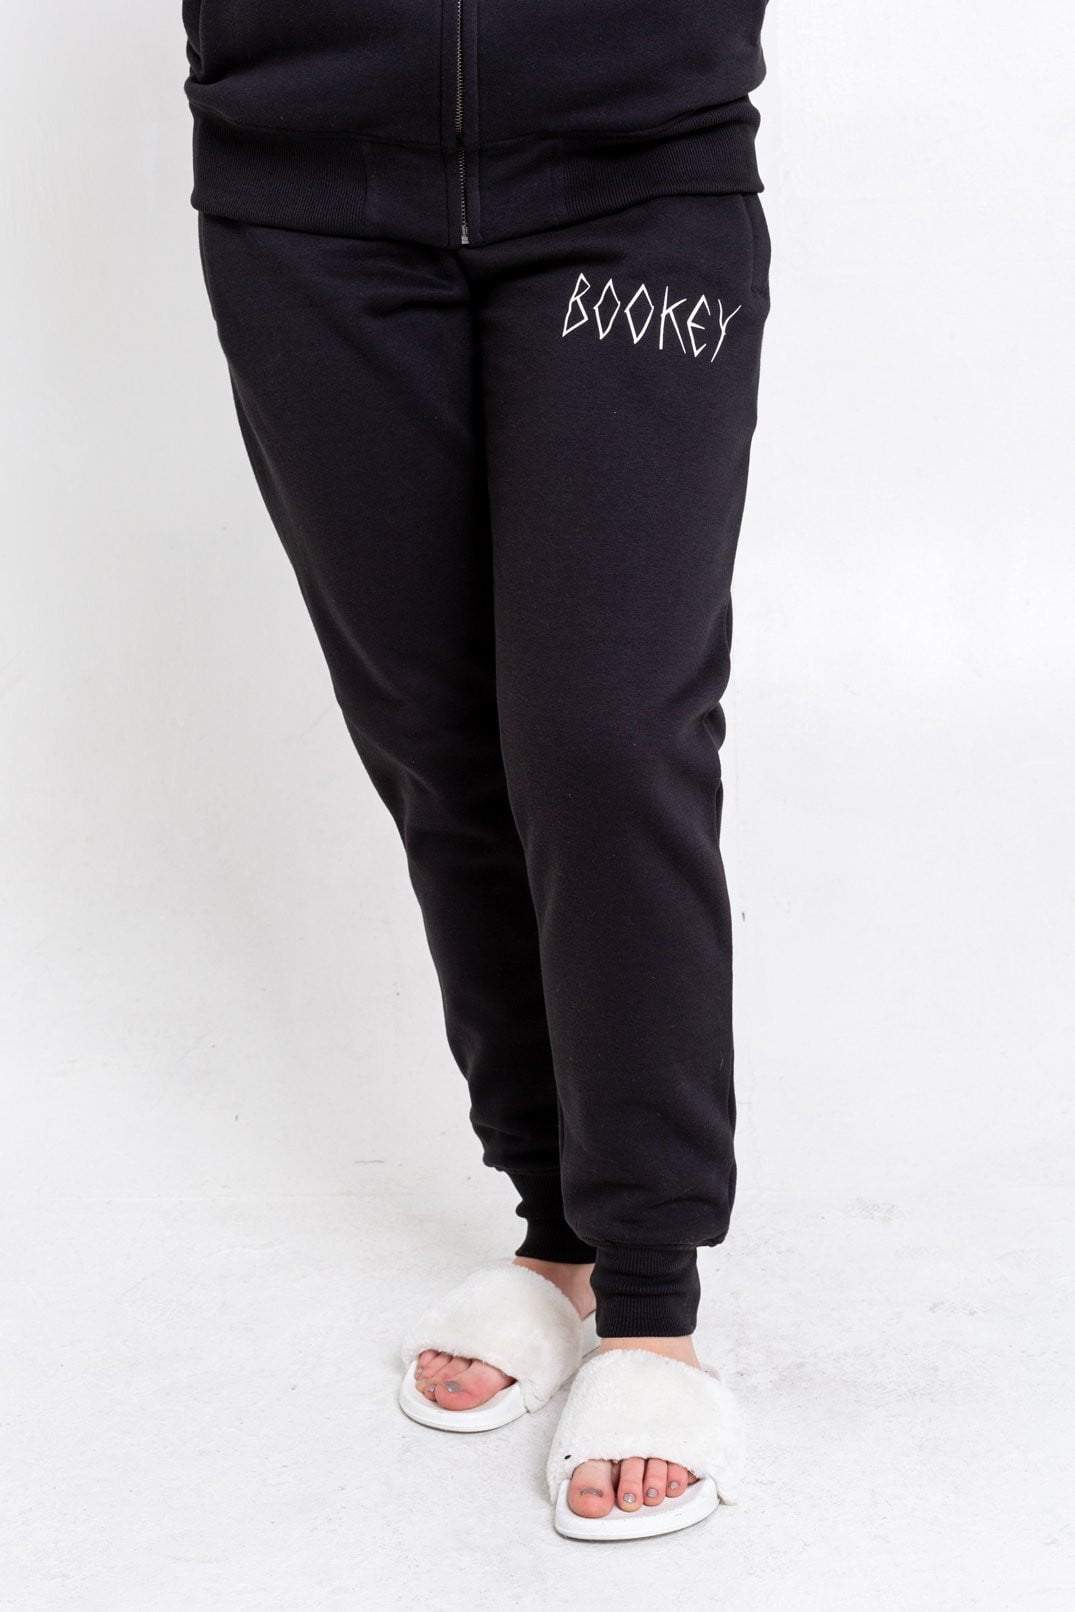 Black Bookey Classic Jog Pants - Womens - Streetwear - Street